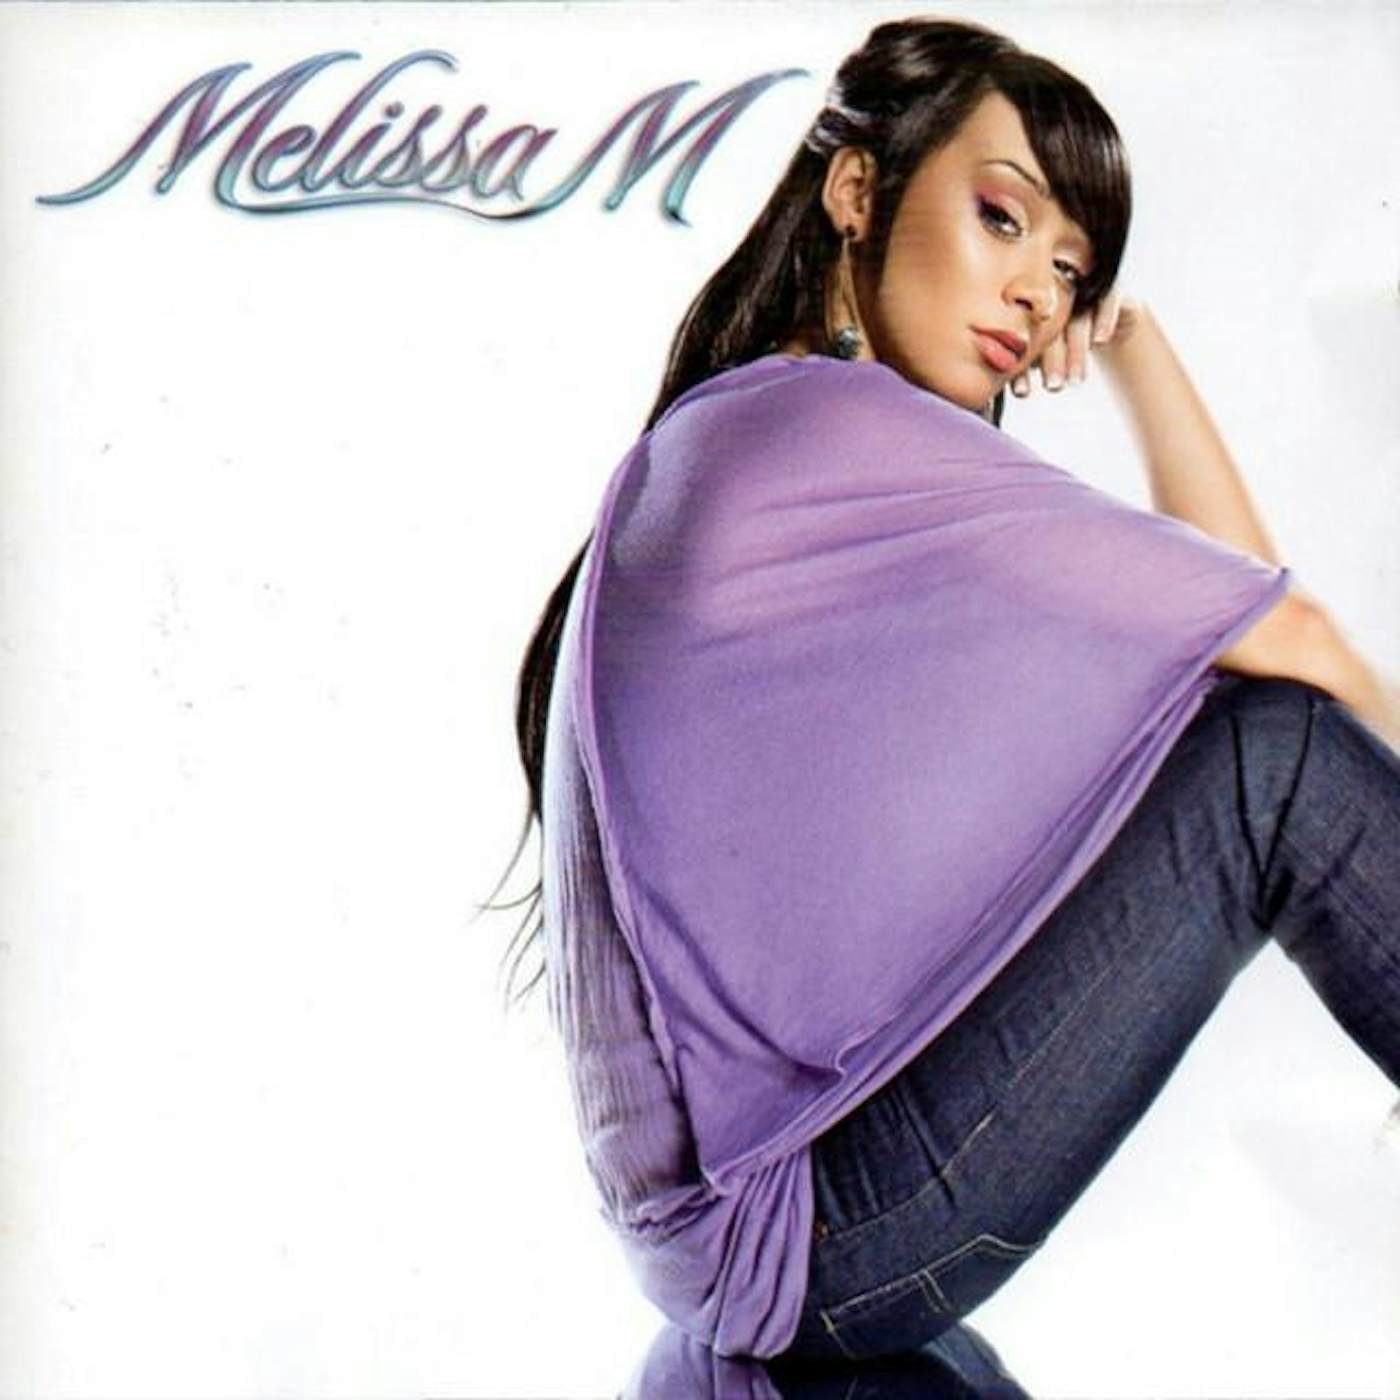 Melissa M